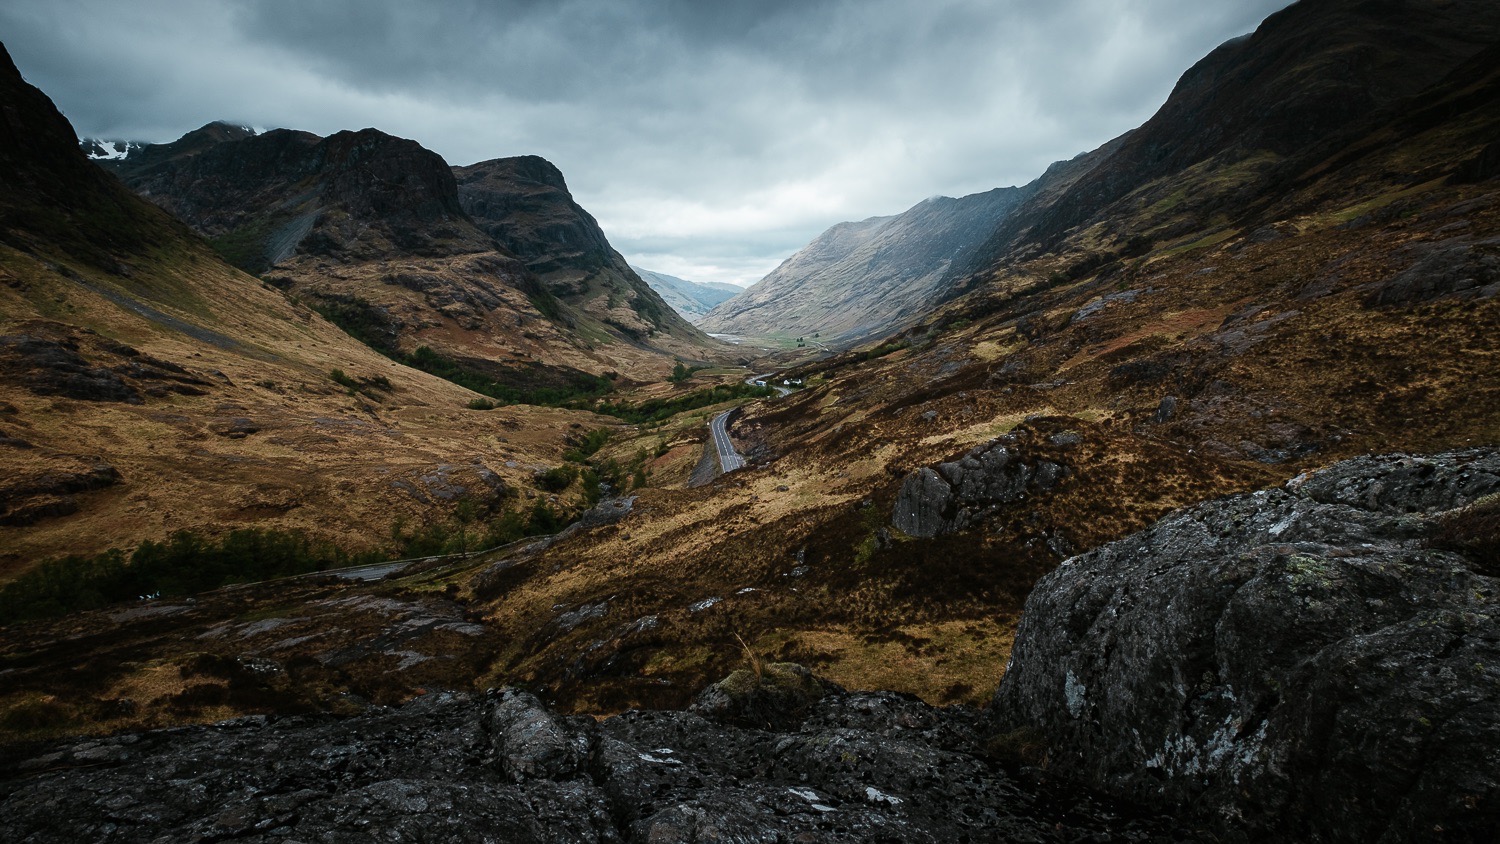 0025-scotland-tamron-le monde de la photo-paysage-20190508153508-compress.jpg